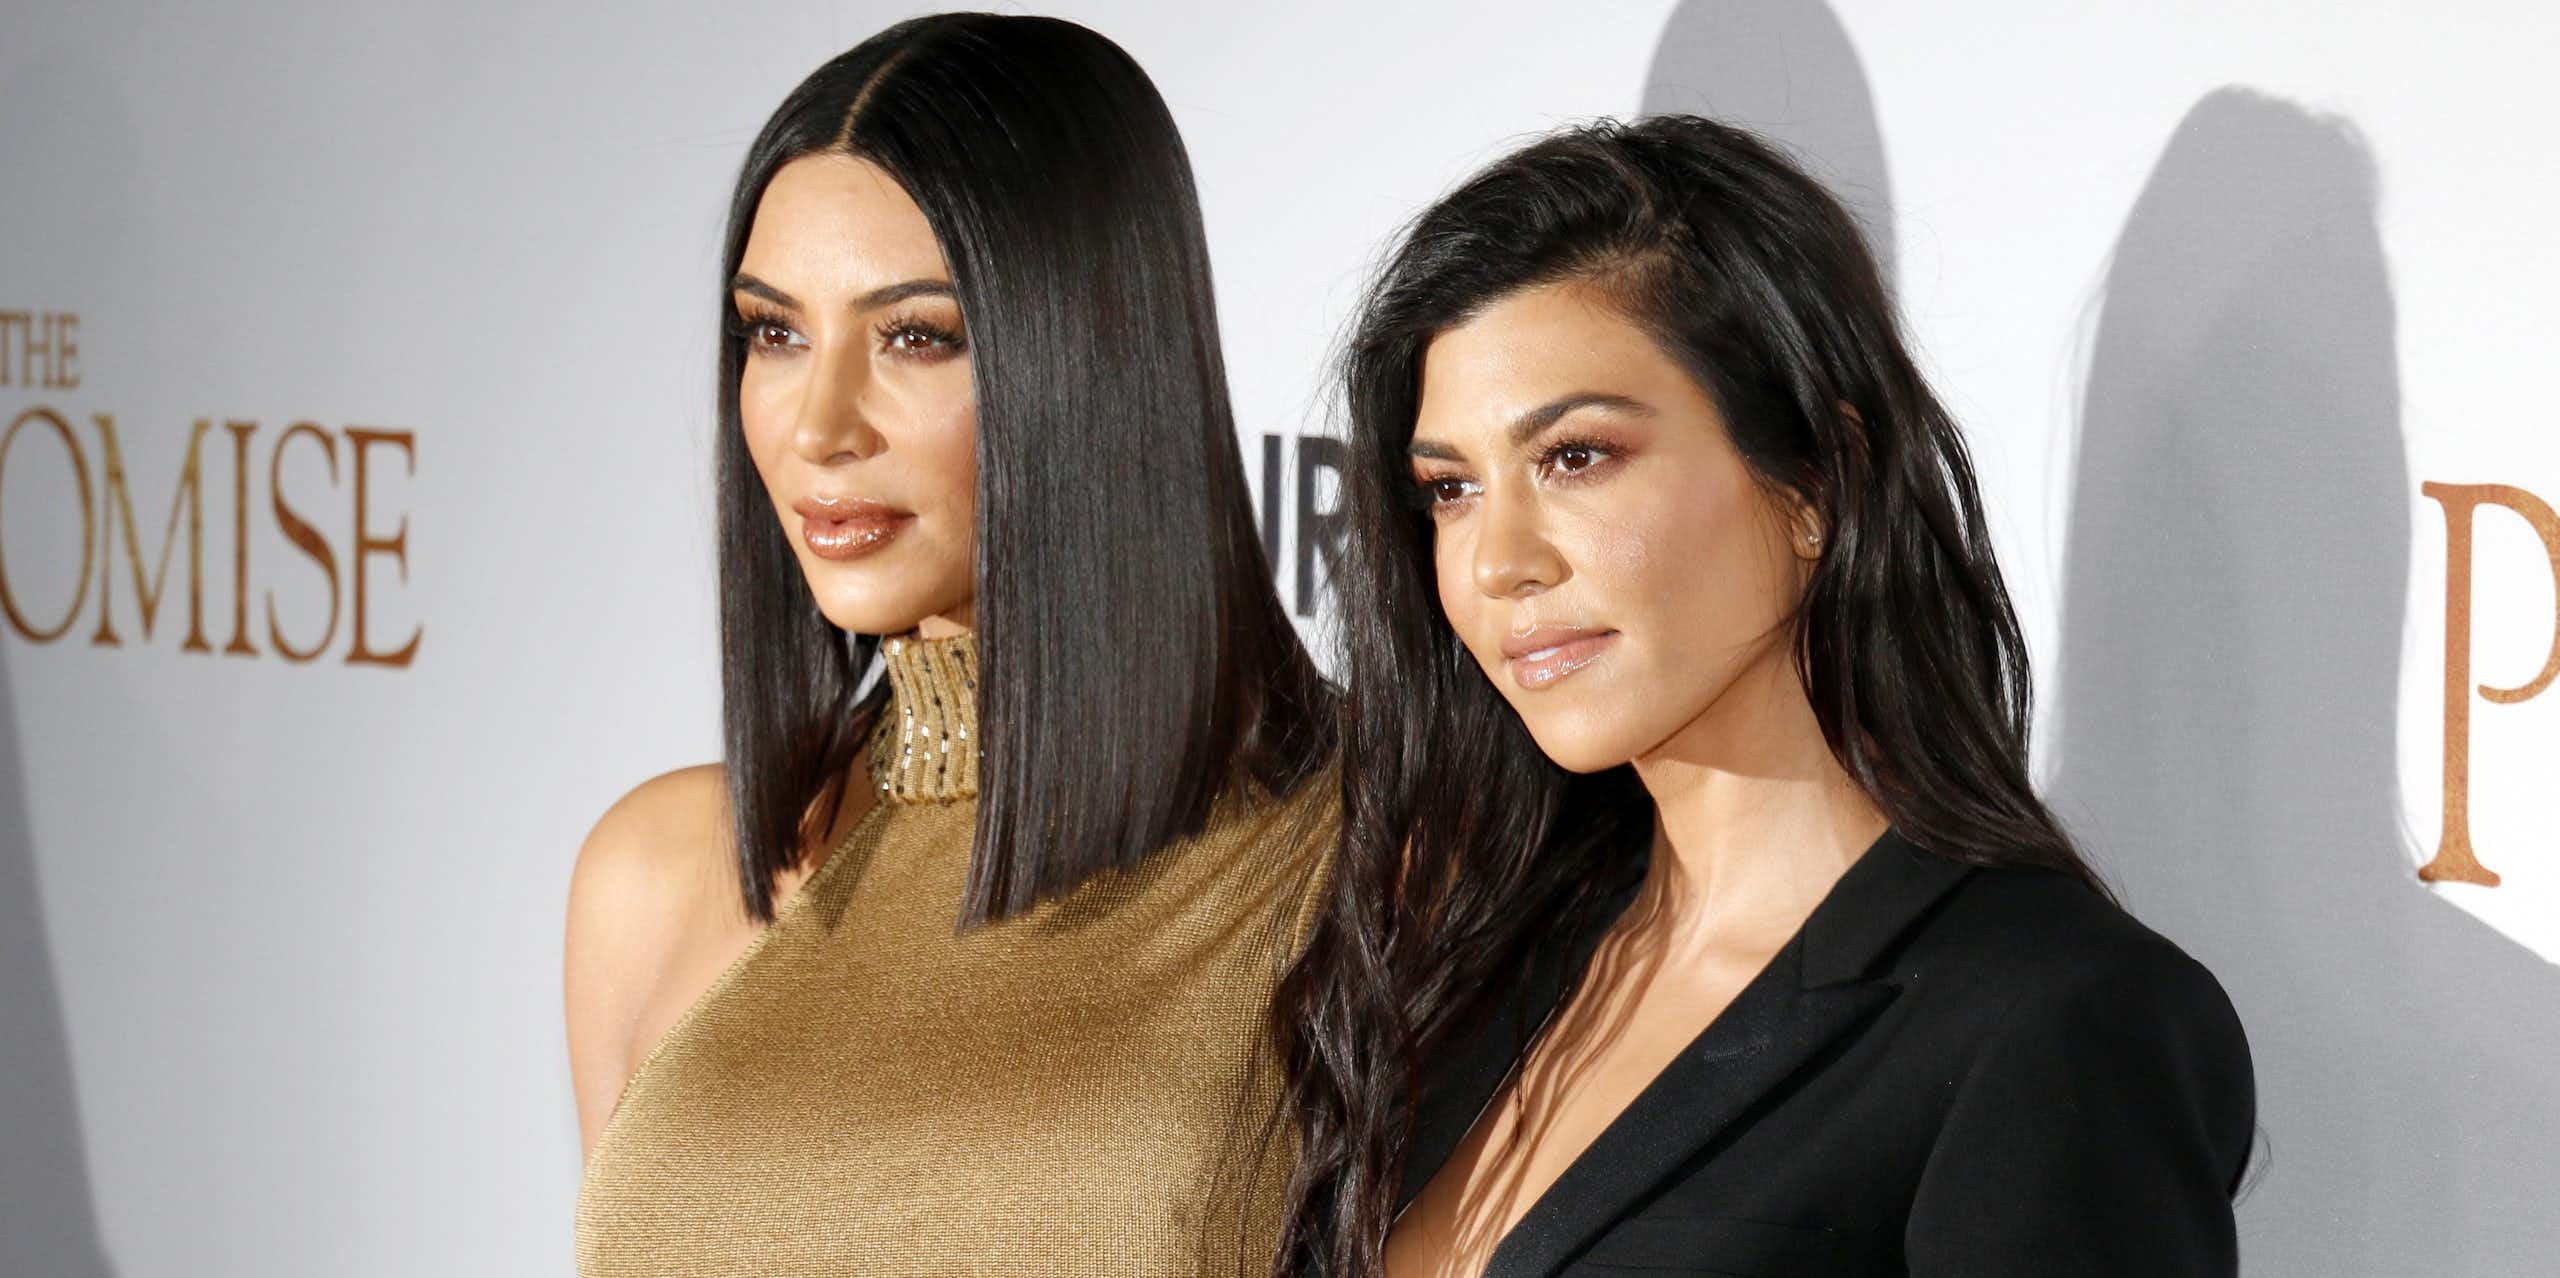 Kim Kardashian wearing a gold, sleeveless dress poses next to Kourtney Kardashian, who wears a black blazer, at an event. 